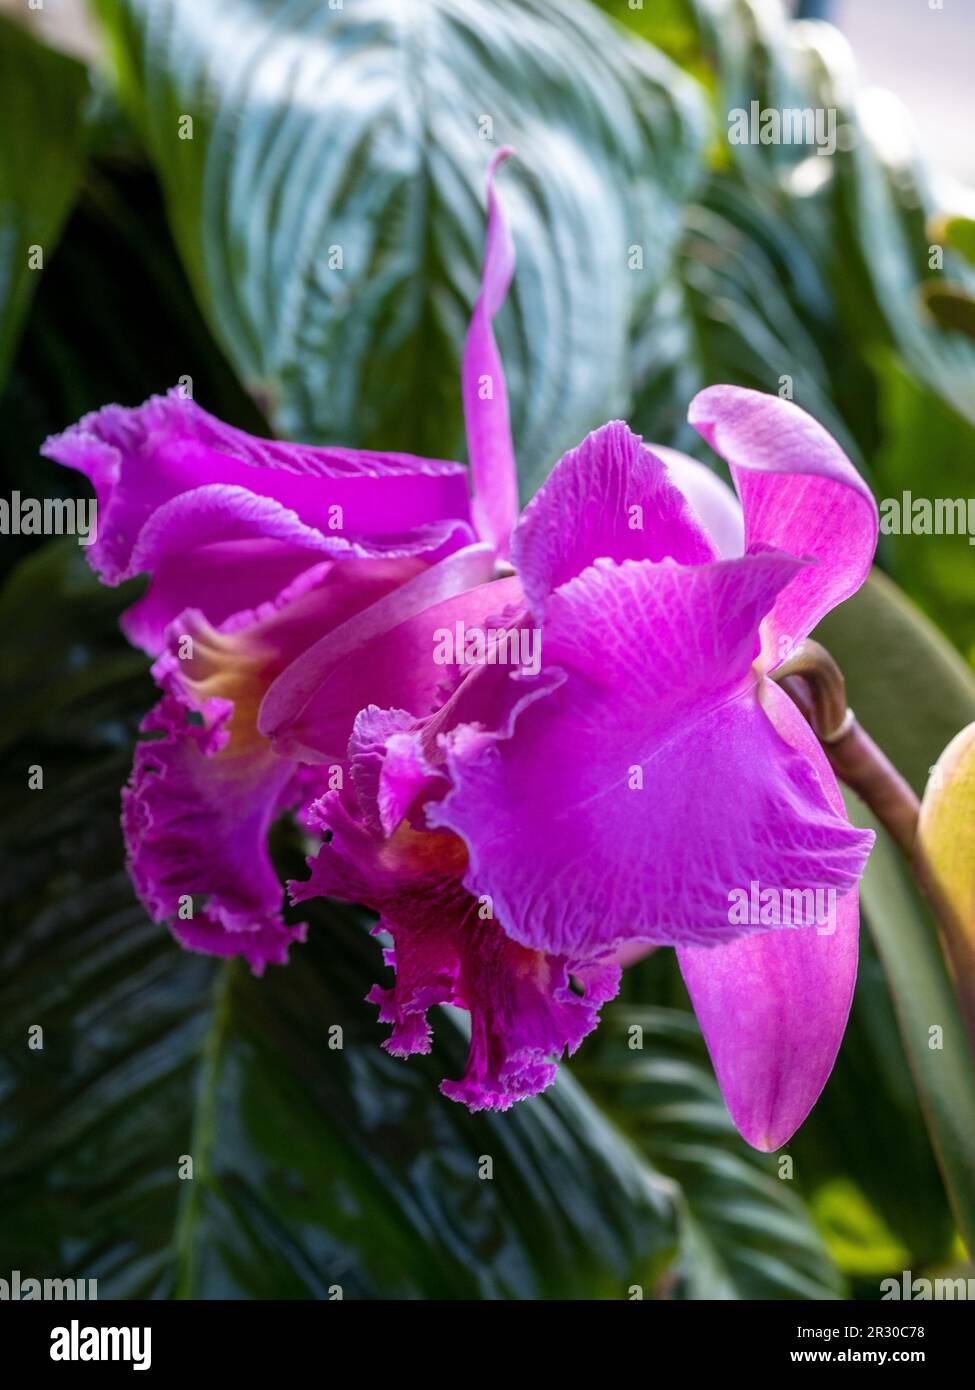 Cattleya orchid flowers, pink blooms, subtropical coastal Australian garden Stock Photo